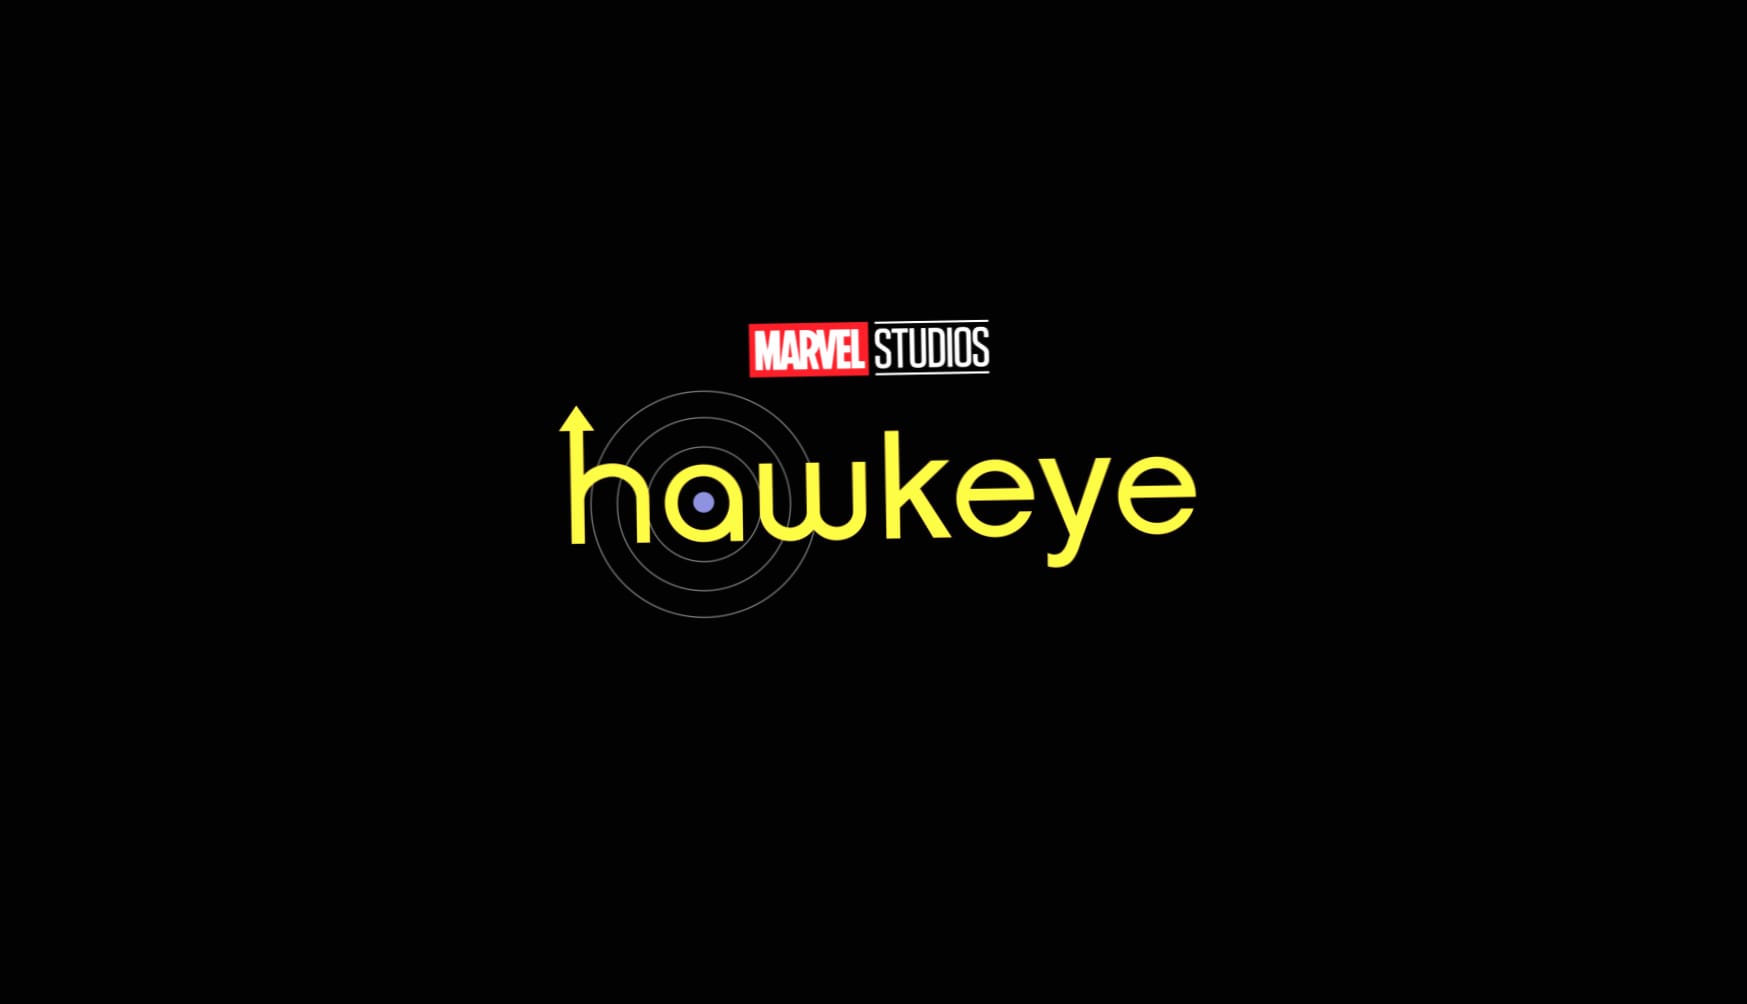 Hawkeye at 2048 x 2048 iPad size wallpapers HD quality